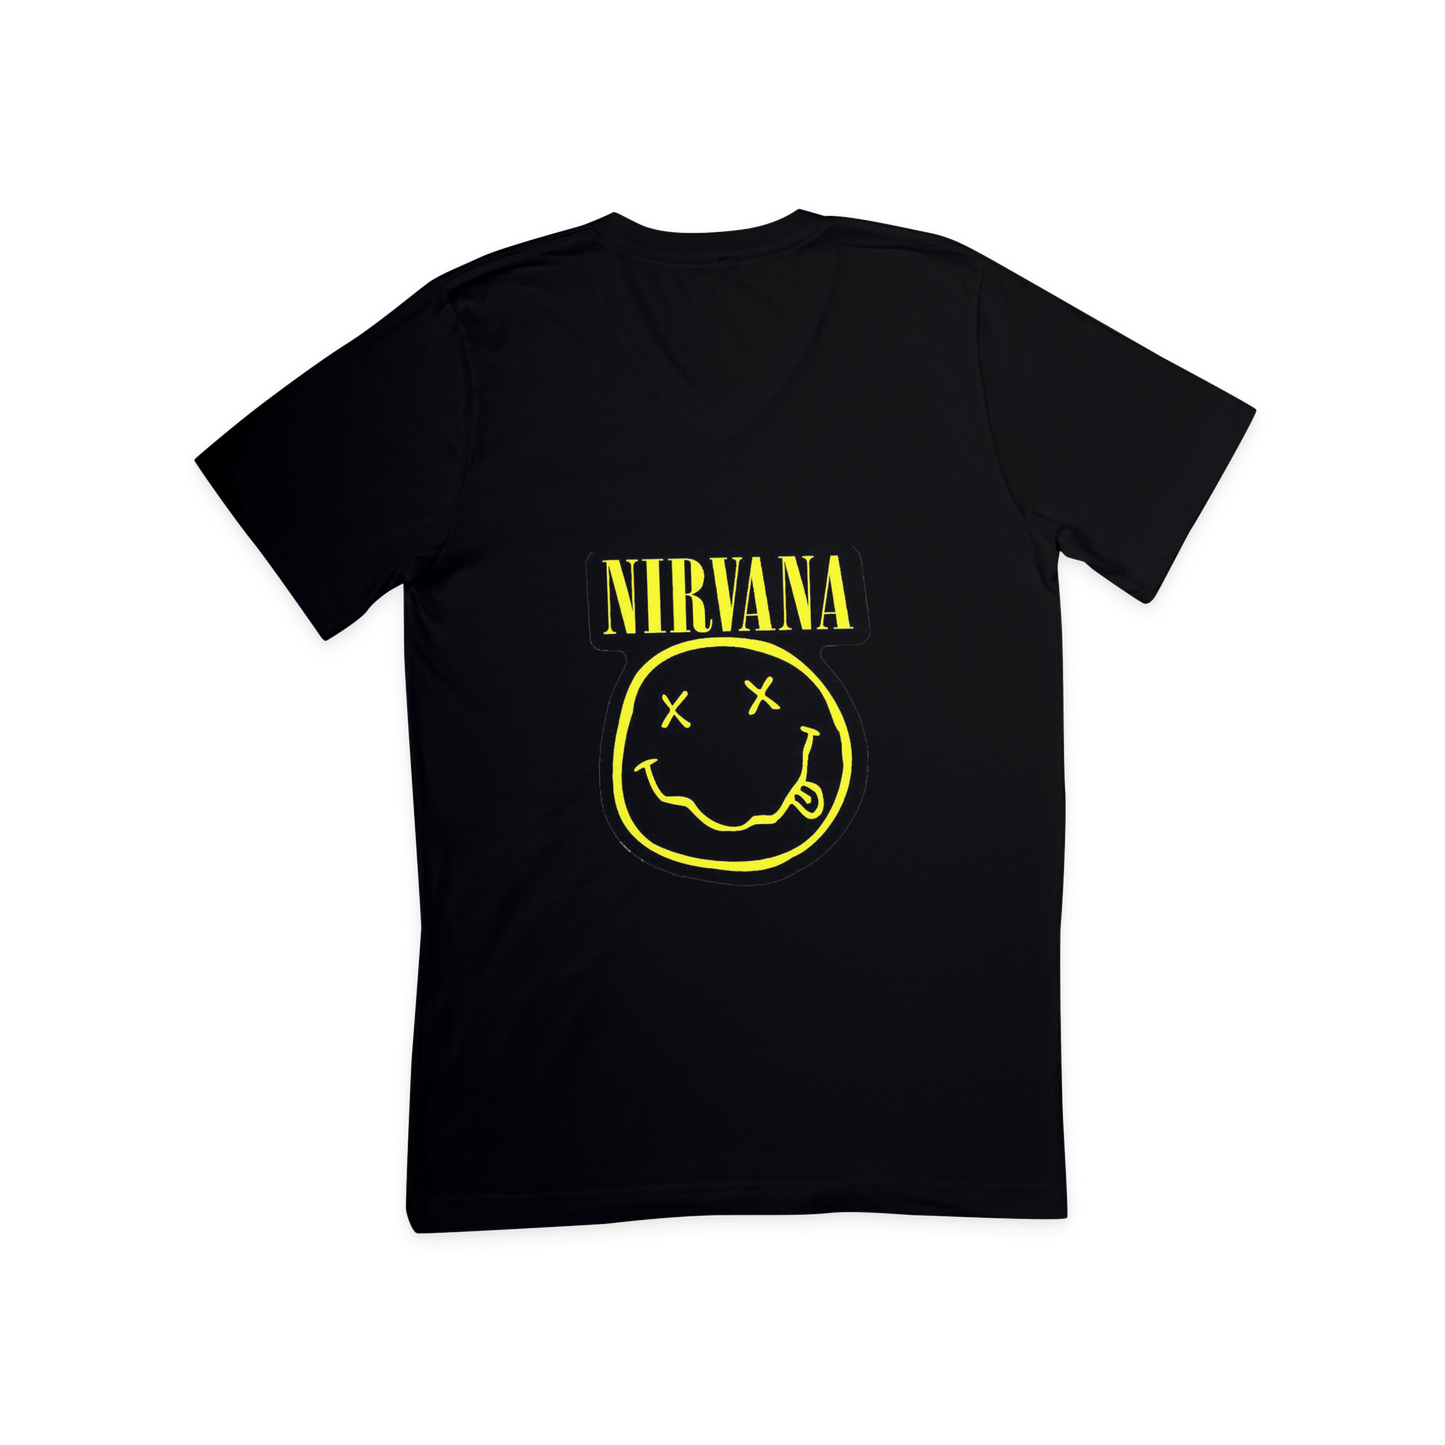 Nirvana Design T-shirt